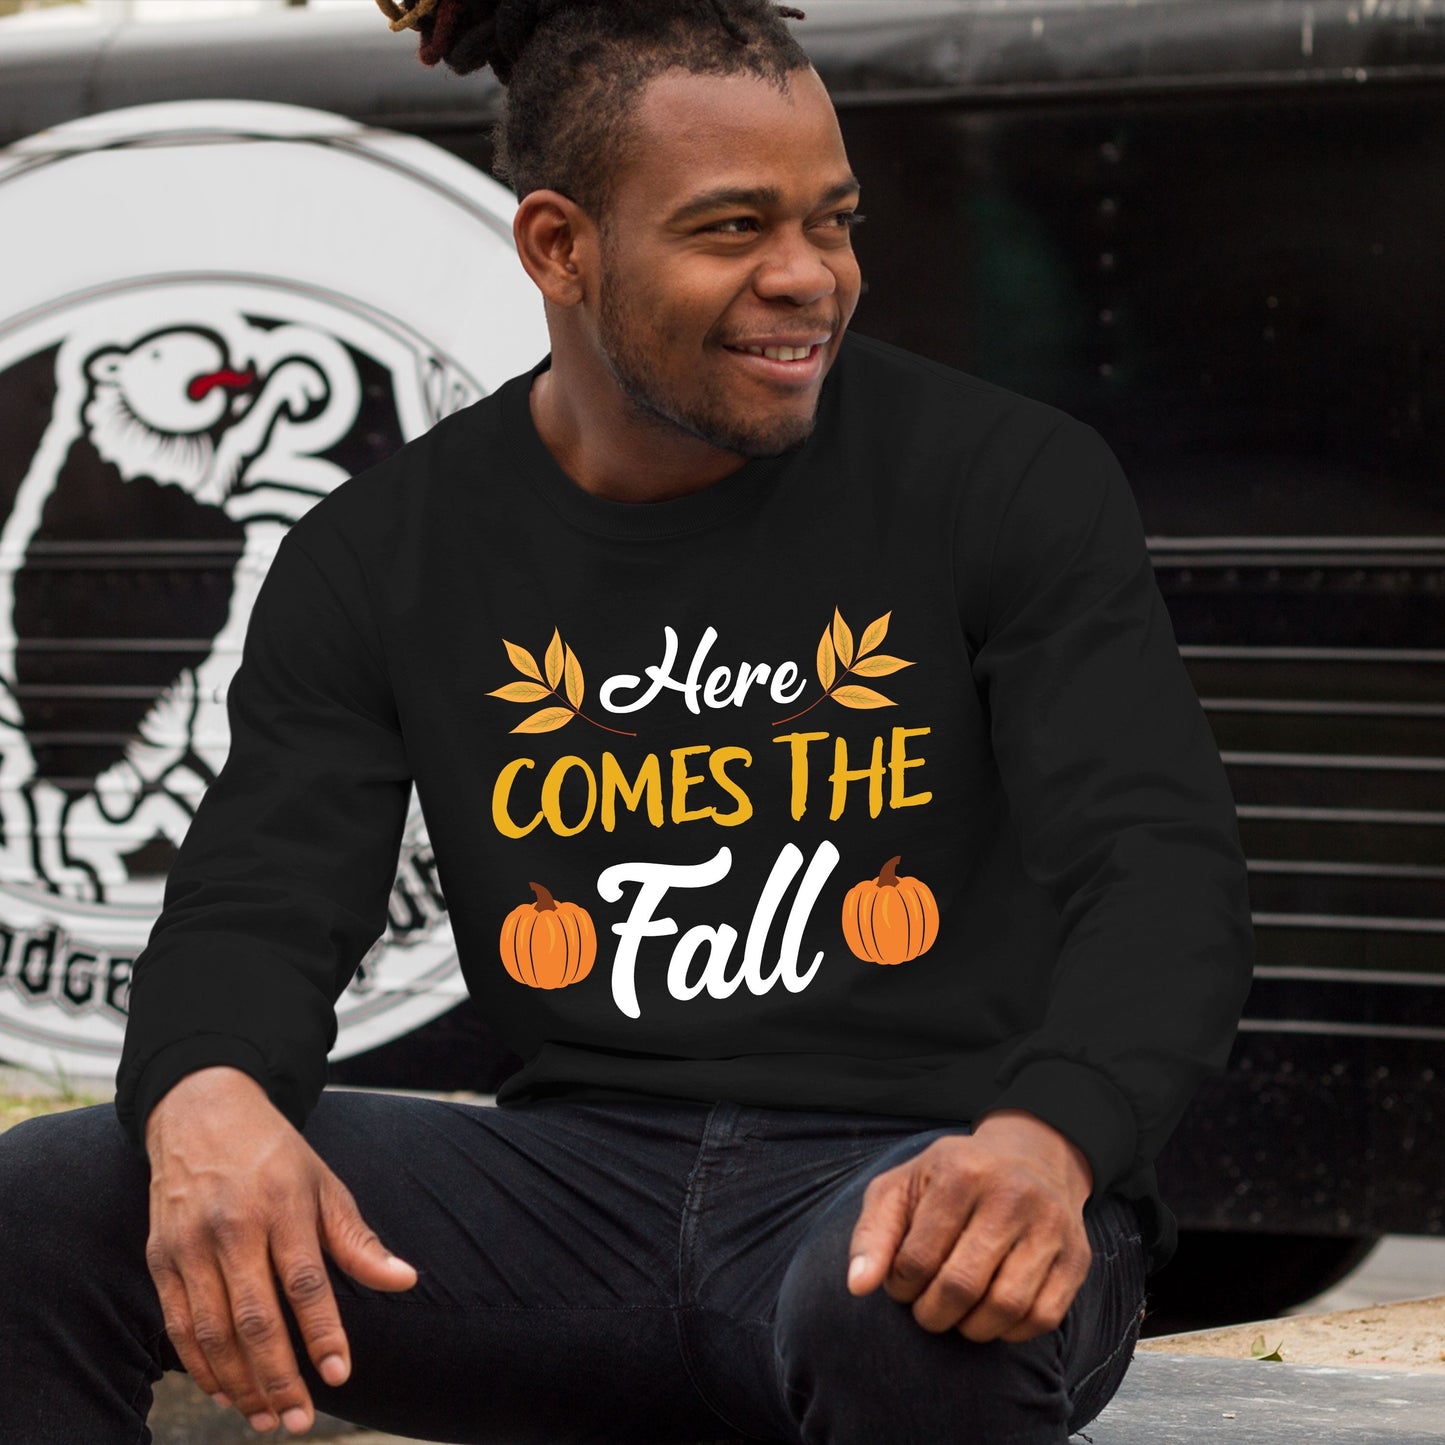 Fall Here Comes Fall Sweatshirt, Fall Sweatshirt, Fall Sweater for Men, Fall Sweater for Women, Fall Gift Ideas, Funny Fall Sweatshirt